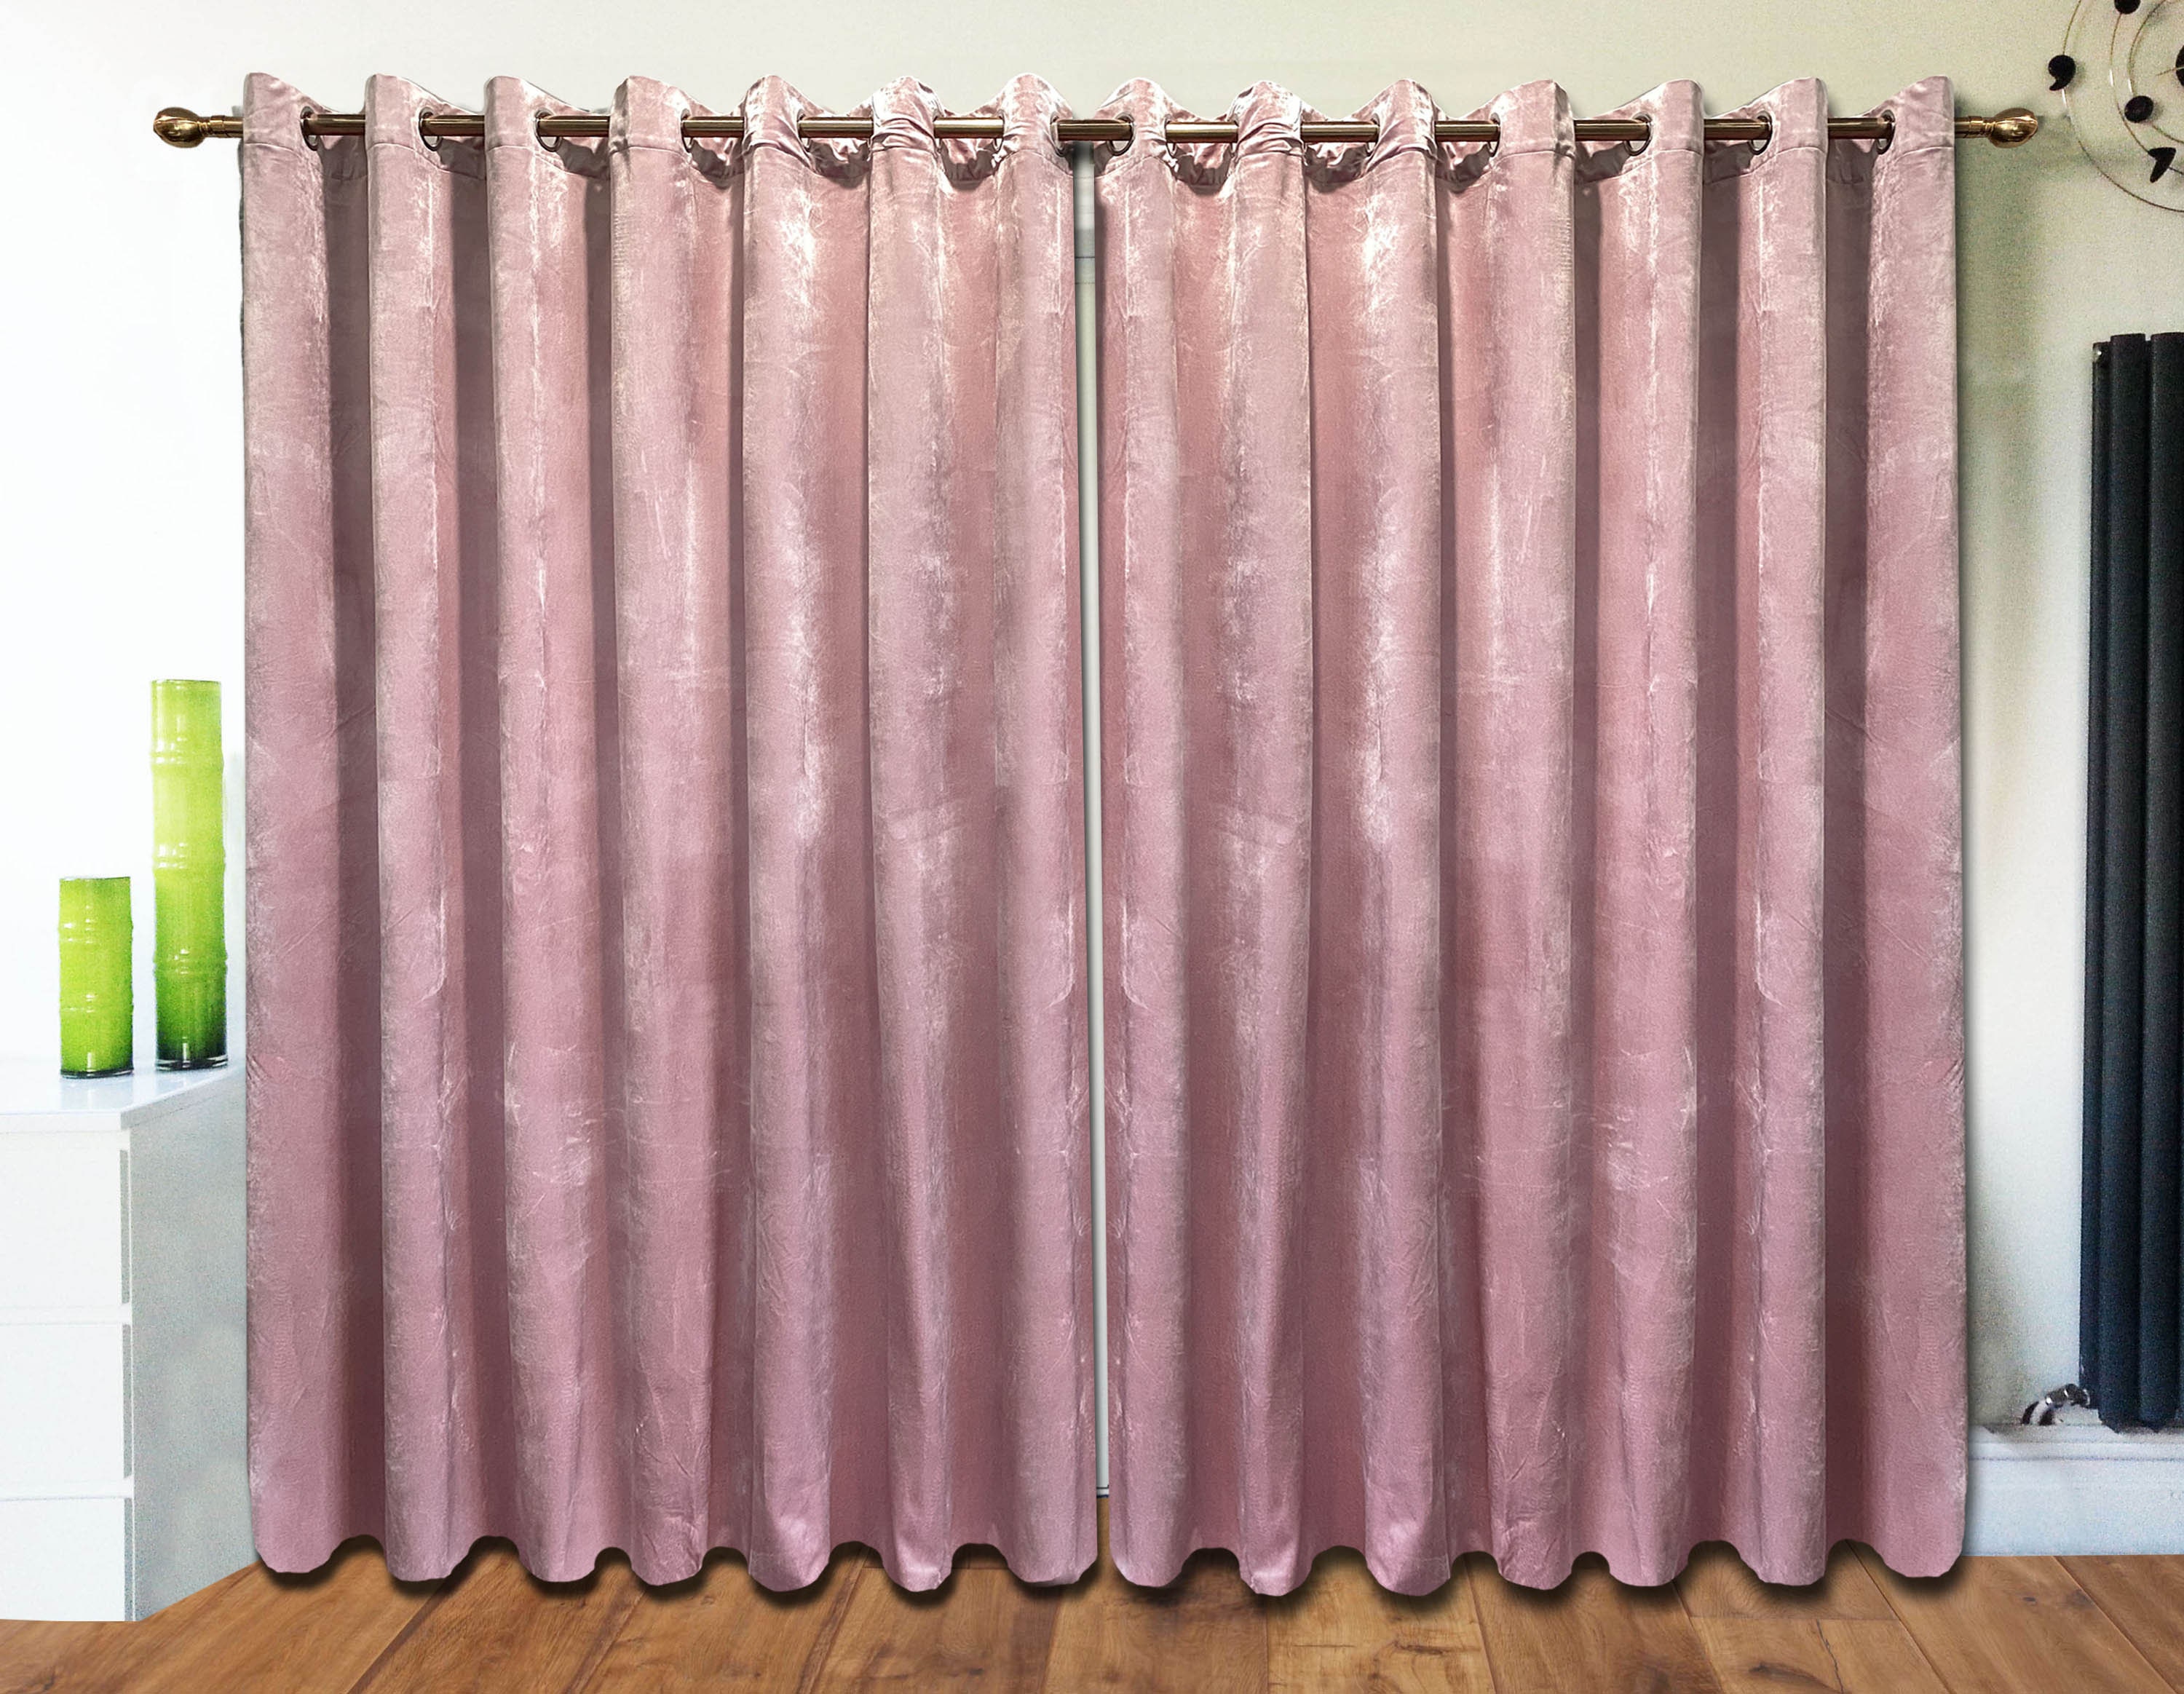 42mm Plastic Curtain Grommets, Curtain Eyelet Rings, Grommets for